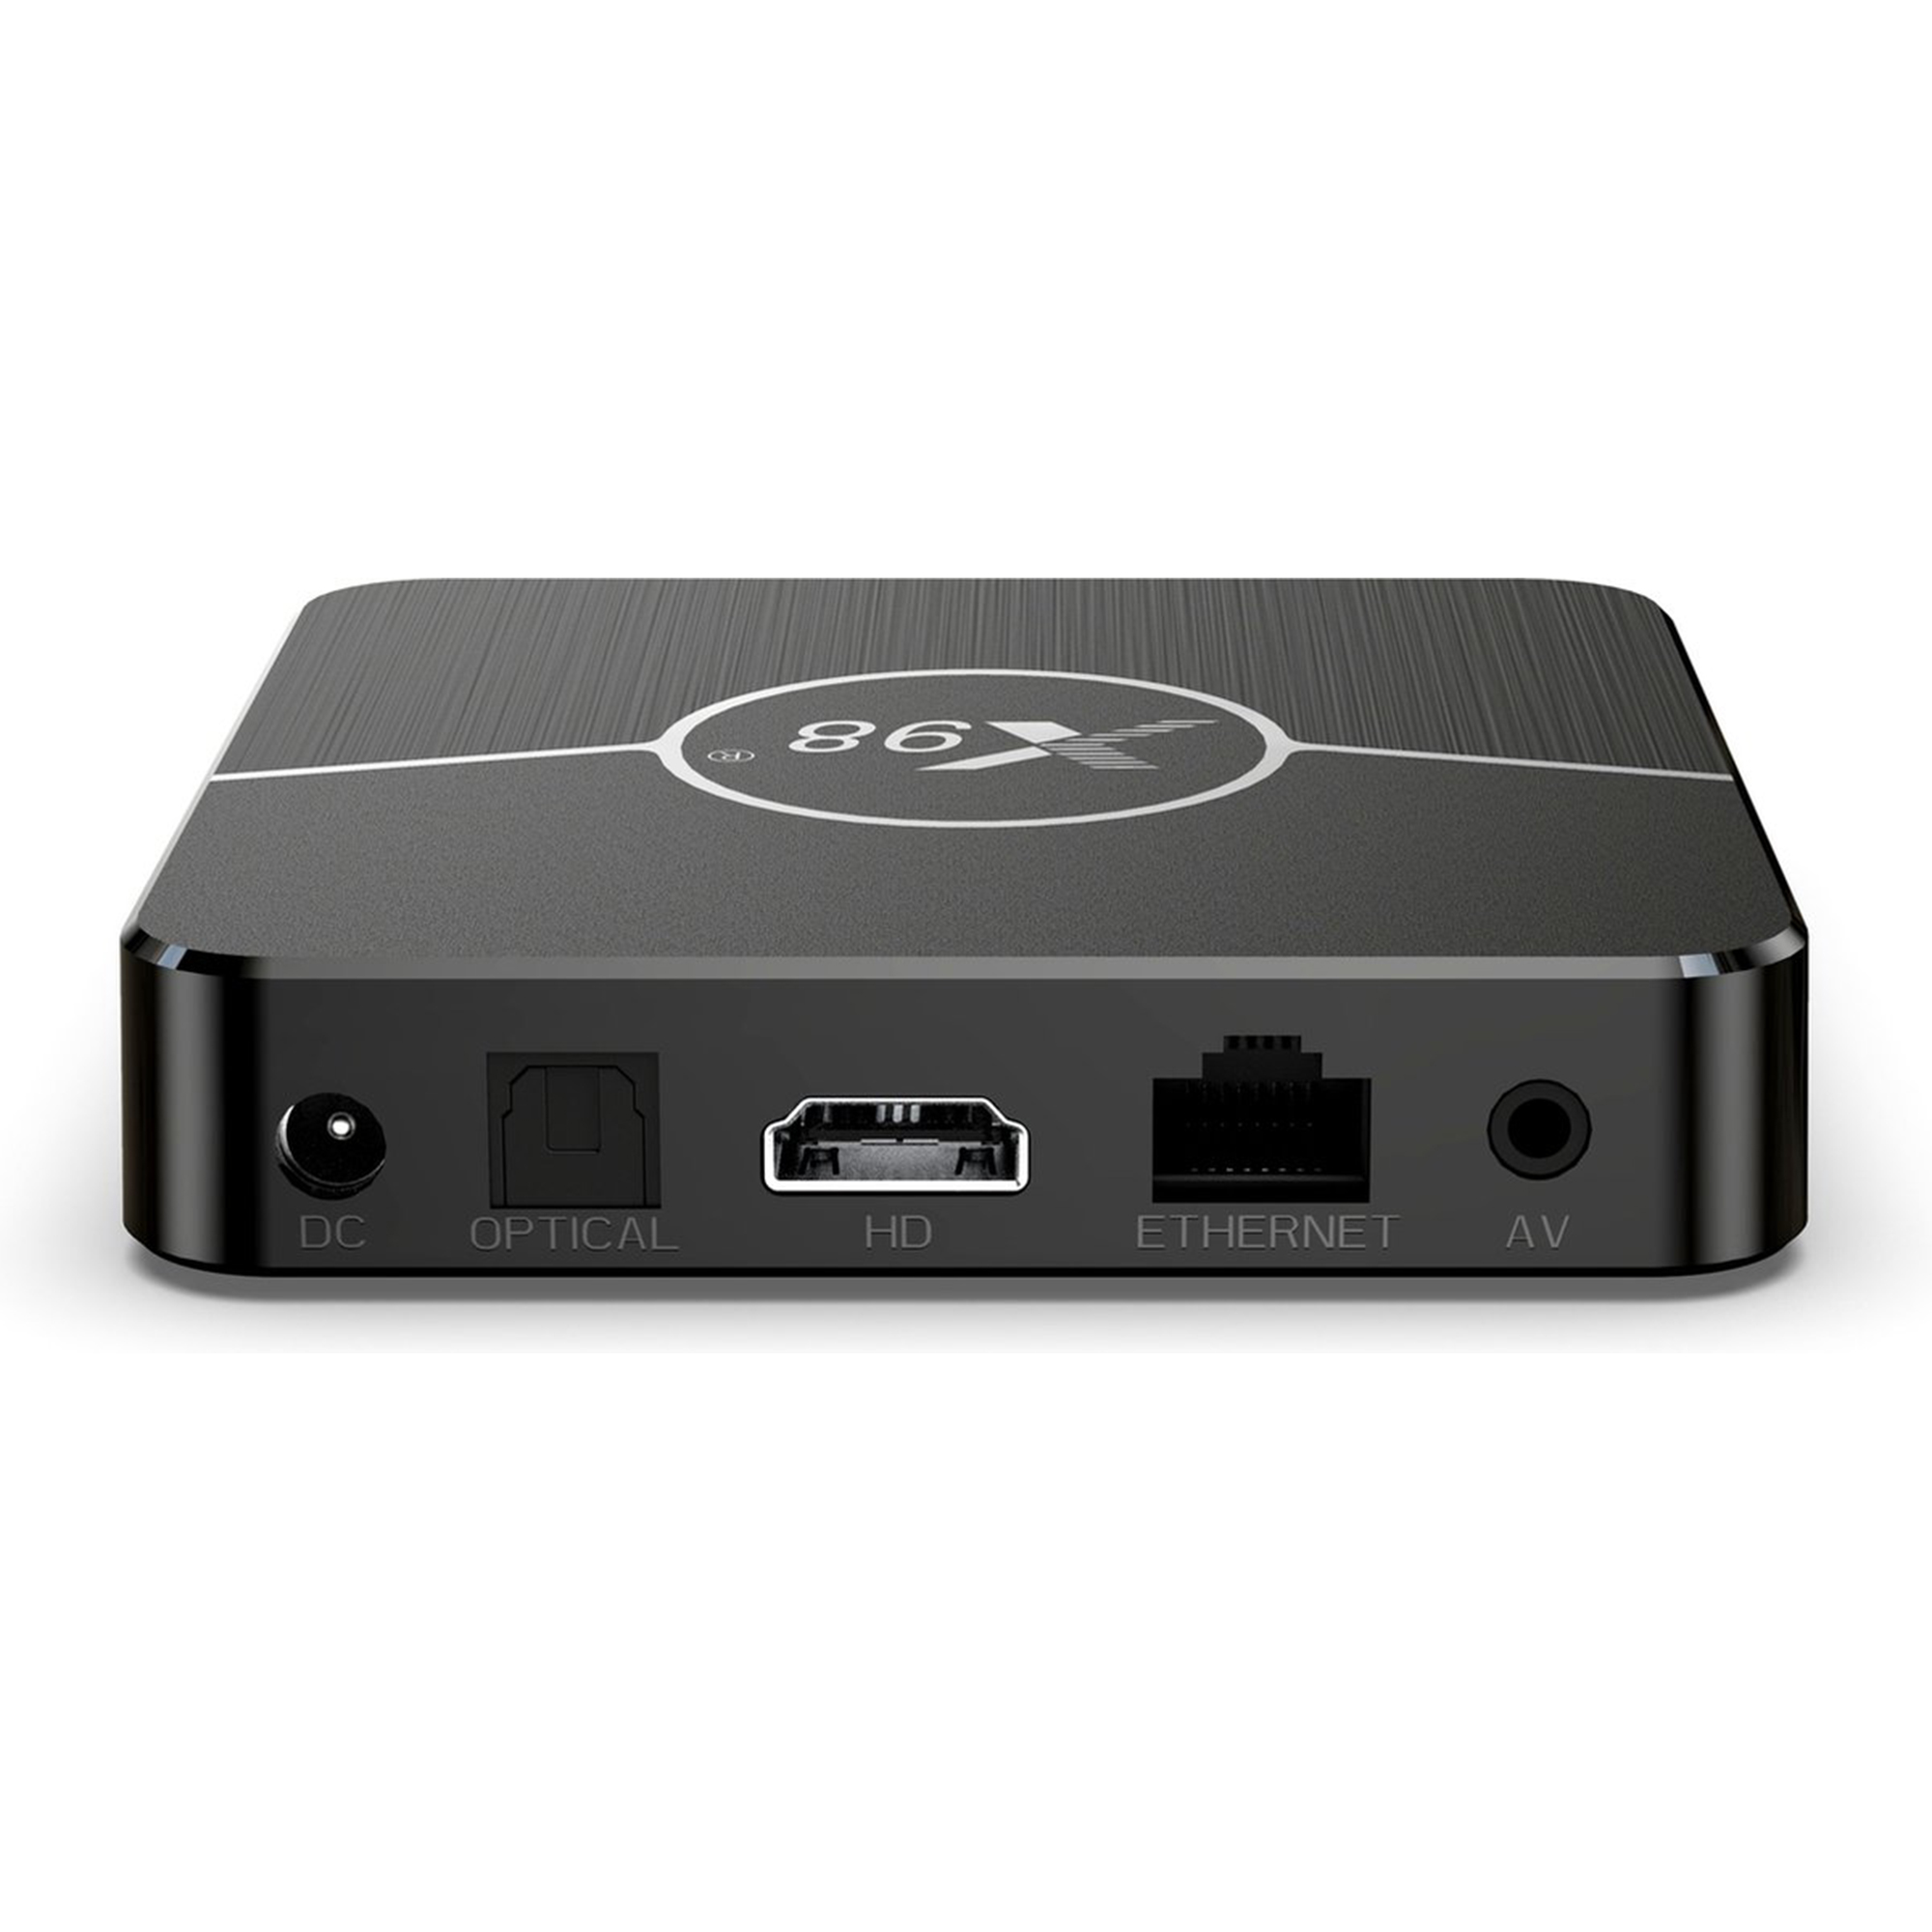 LIPA X98 Plus Android Multimedia box tv Black player, GB 32